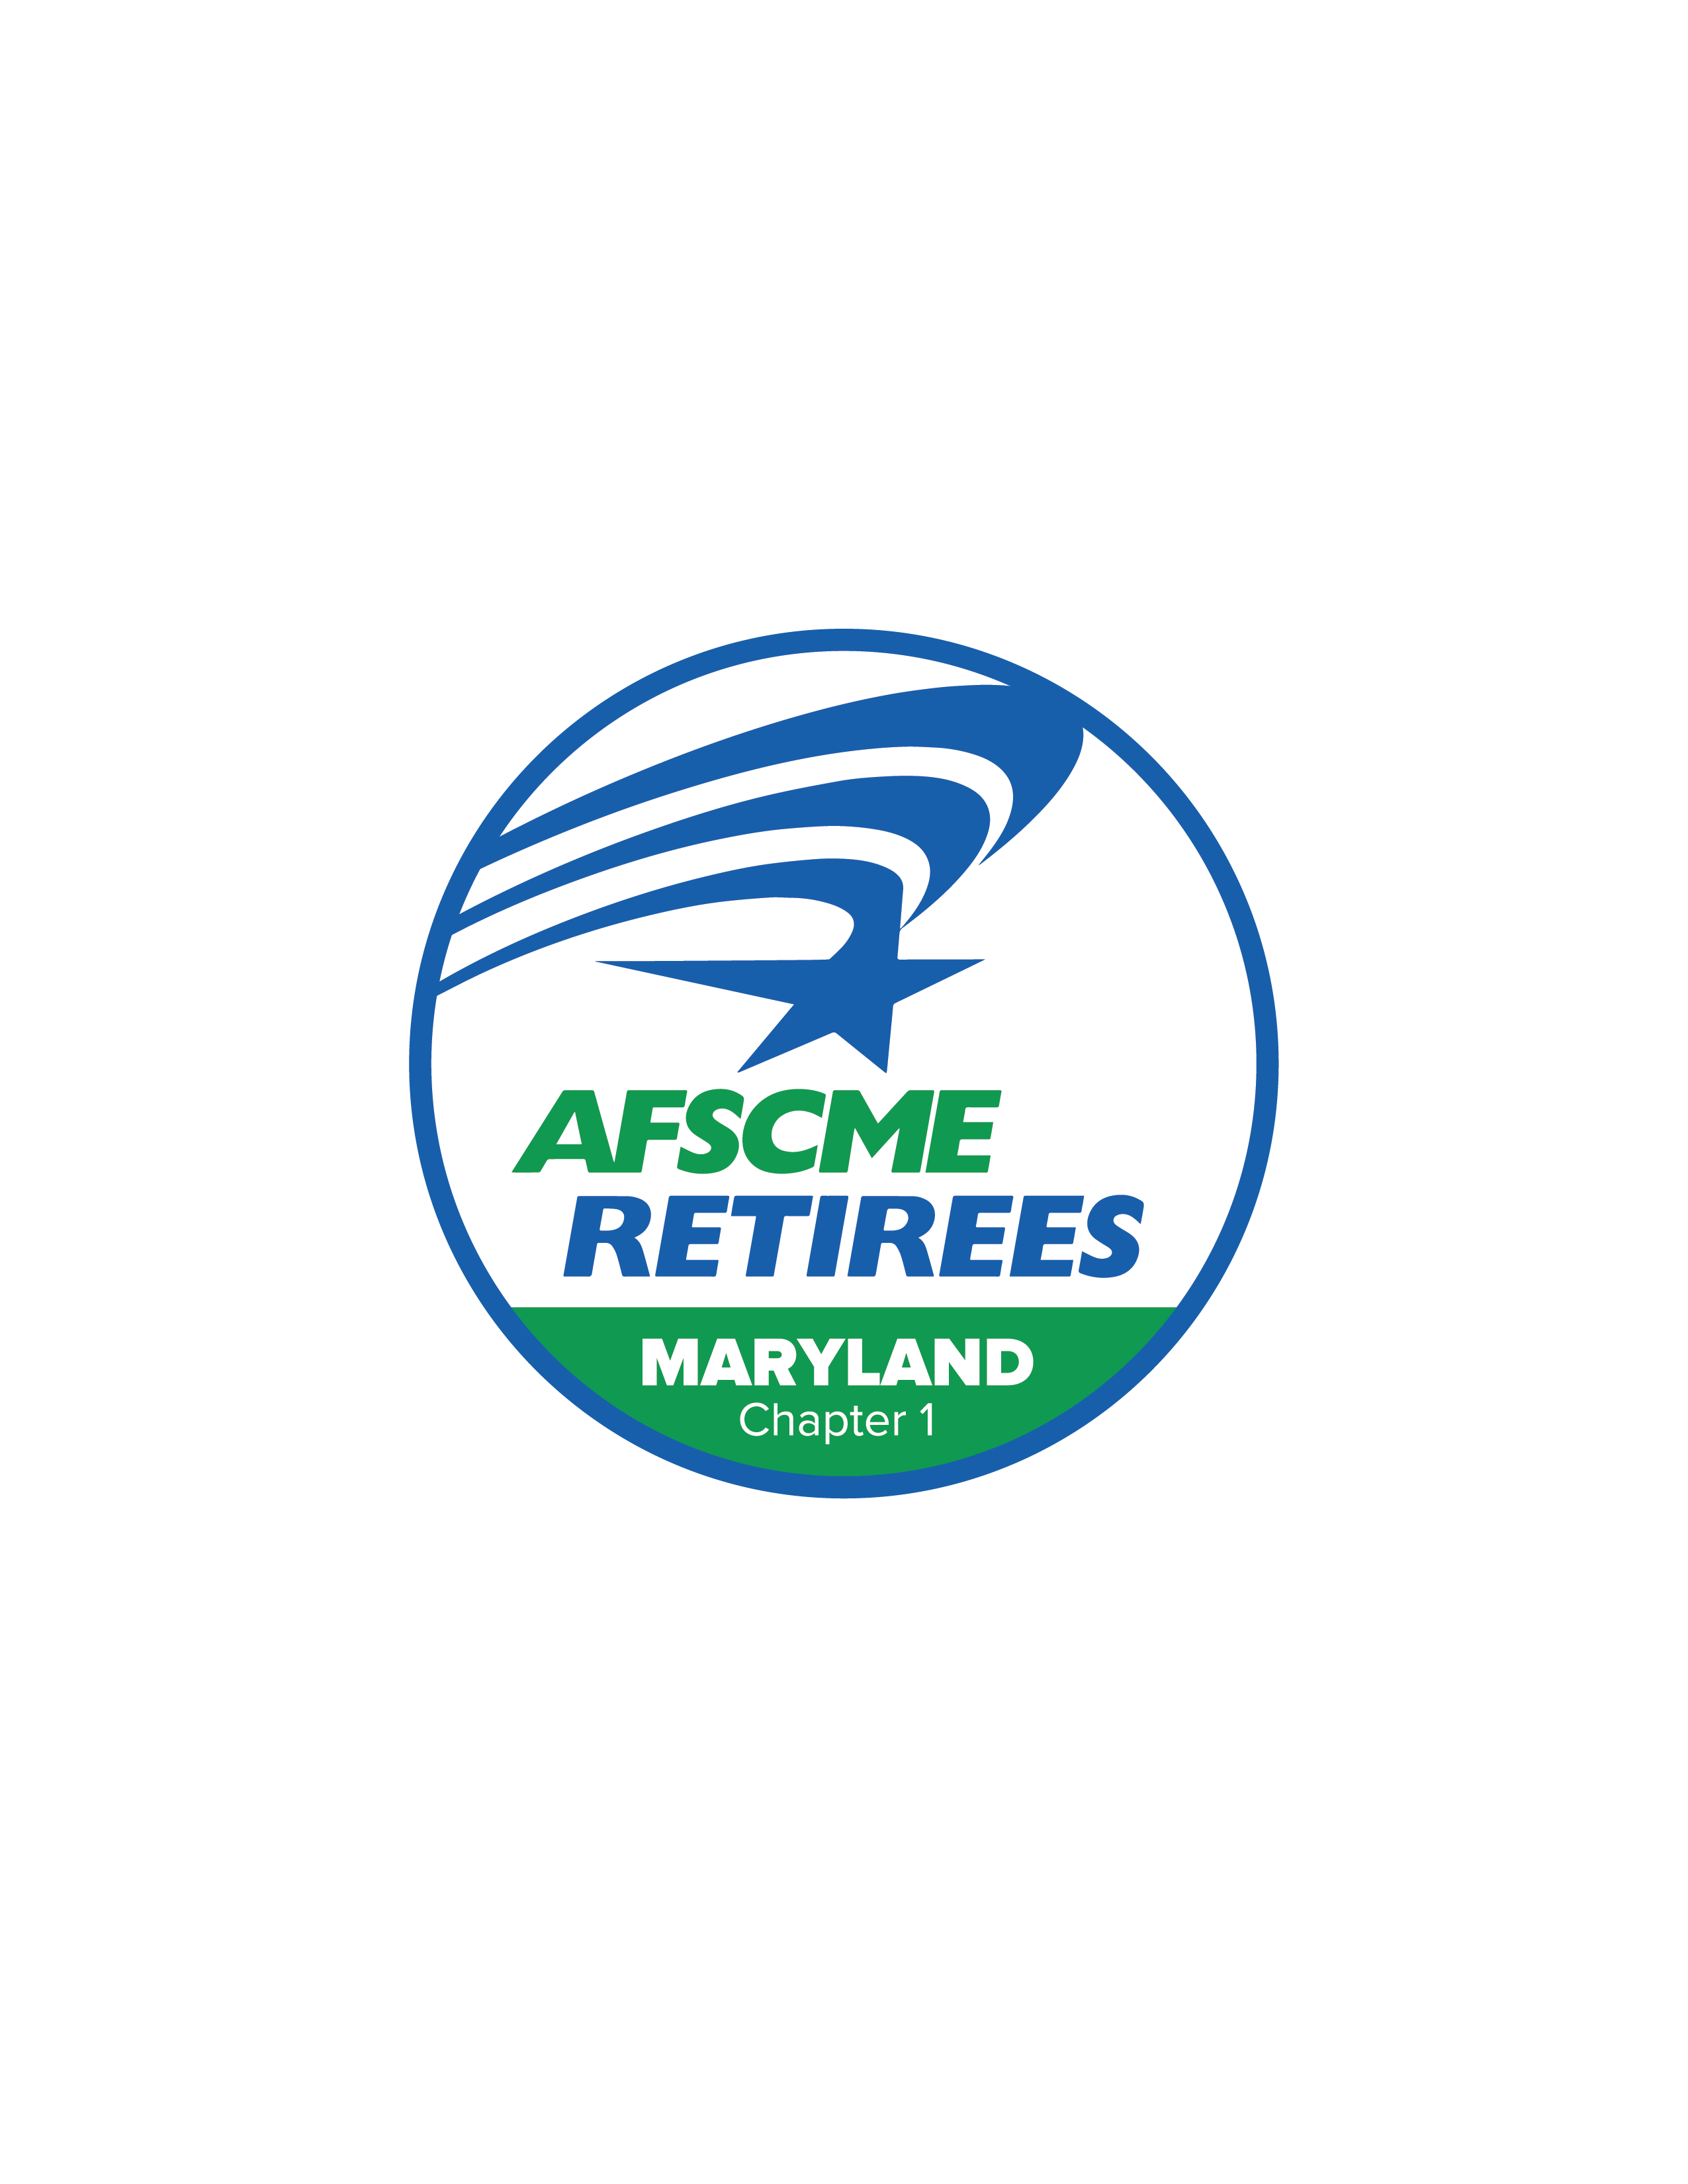 AFSCME Logo - Maryland AFSCME Retirees Chapter 1